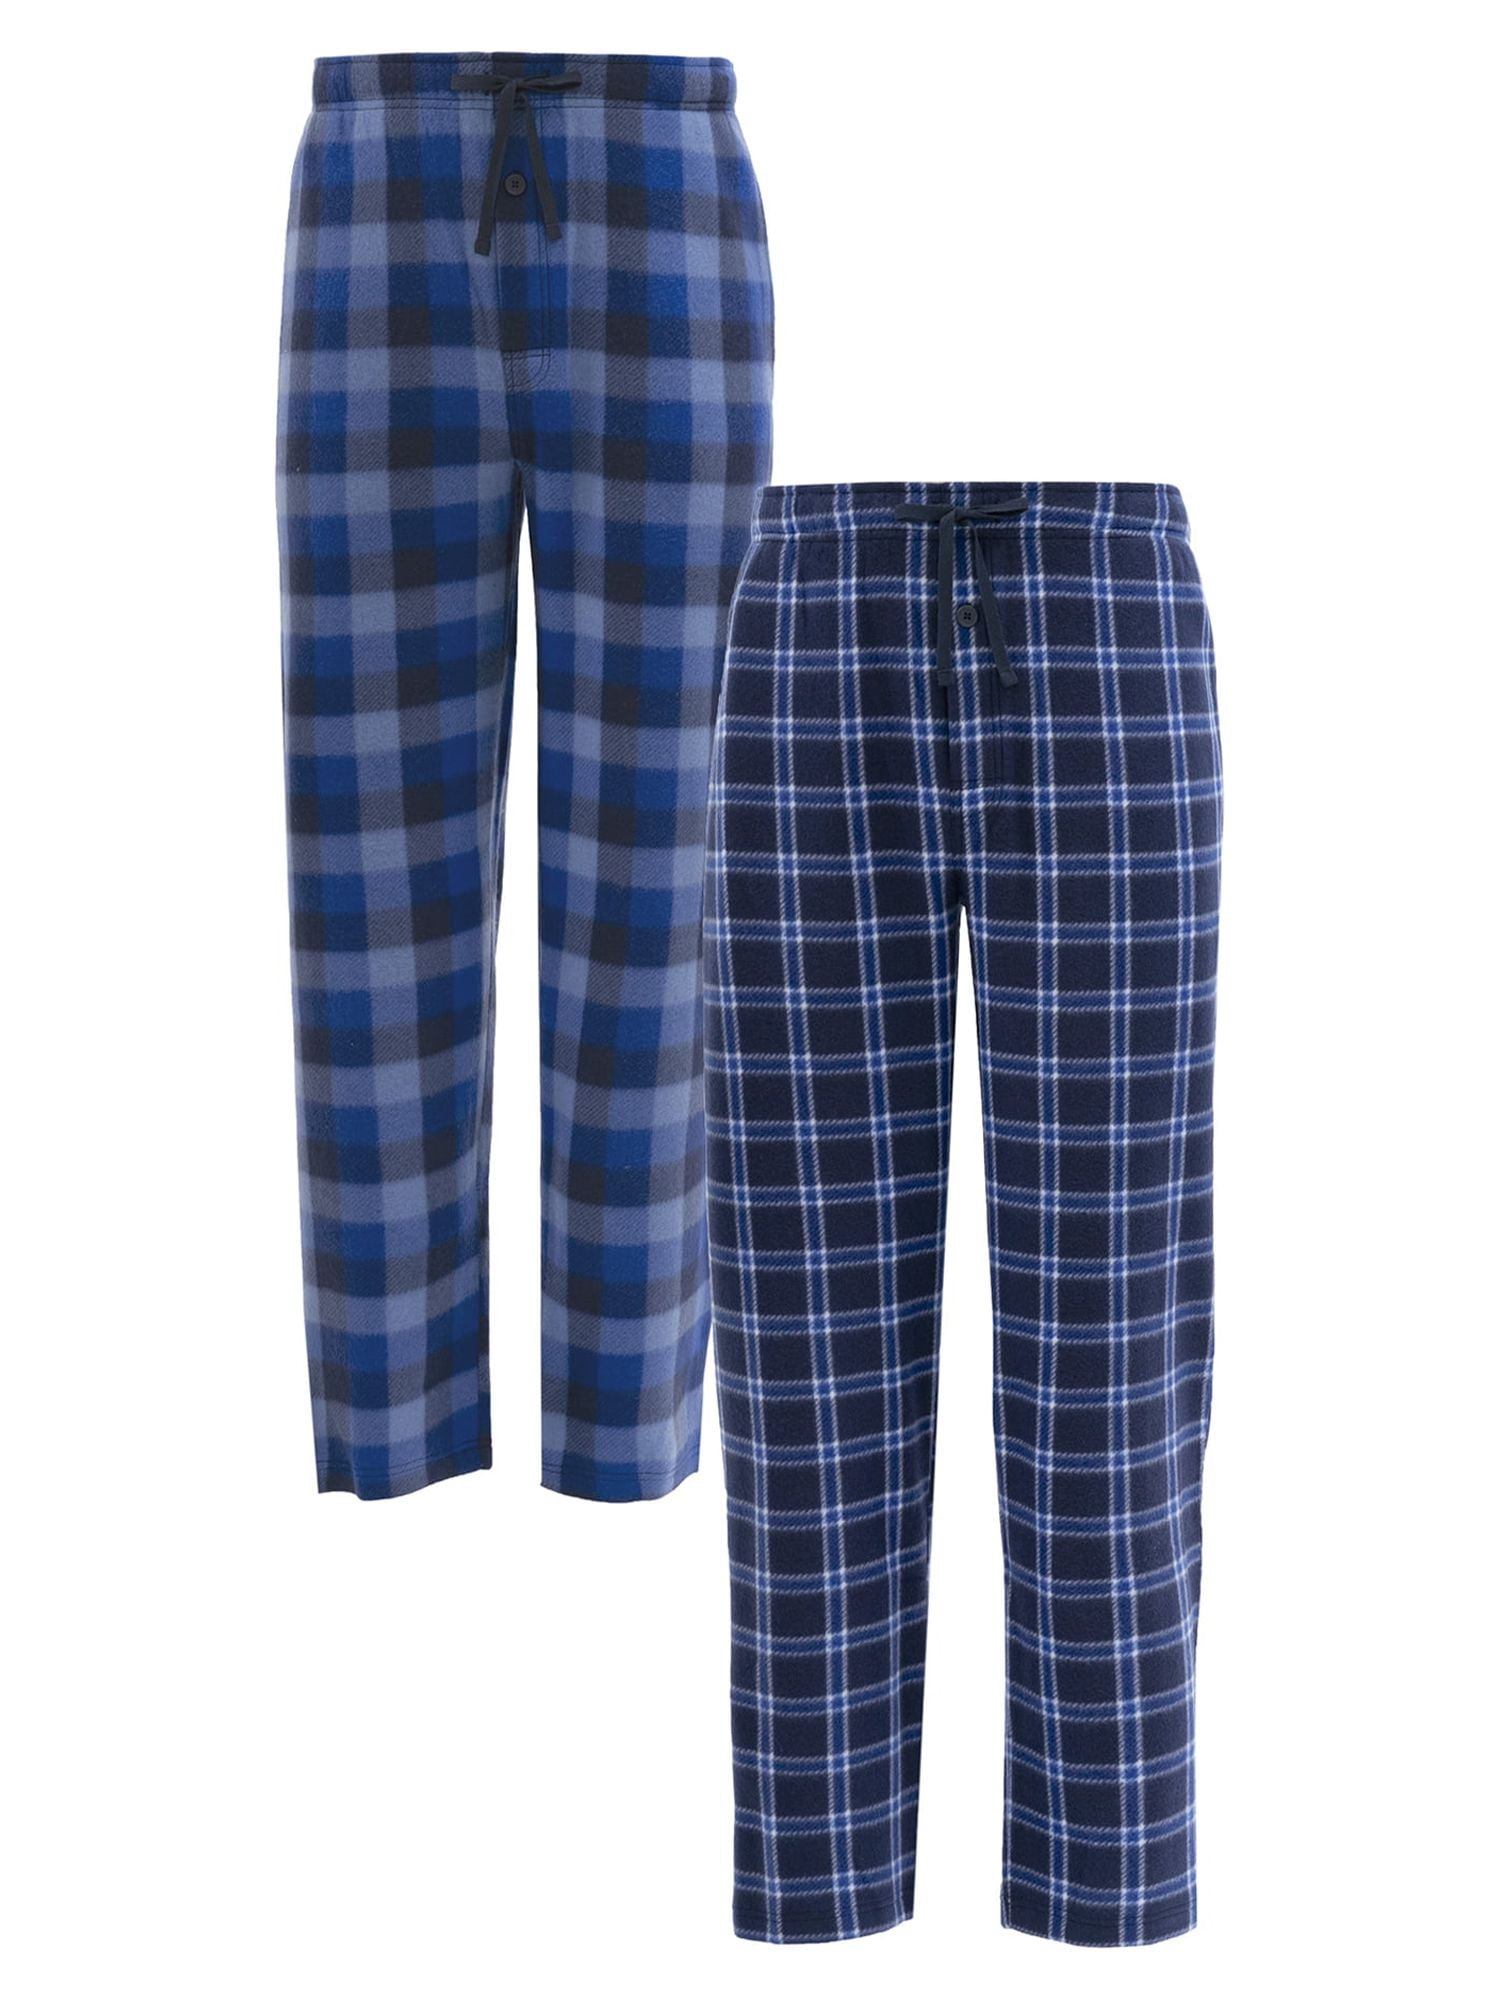 Fruit of the Loom Men's Plaid Fleece Pajama Pant 2-Pack Bundle ...